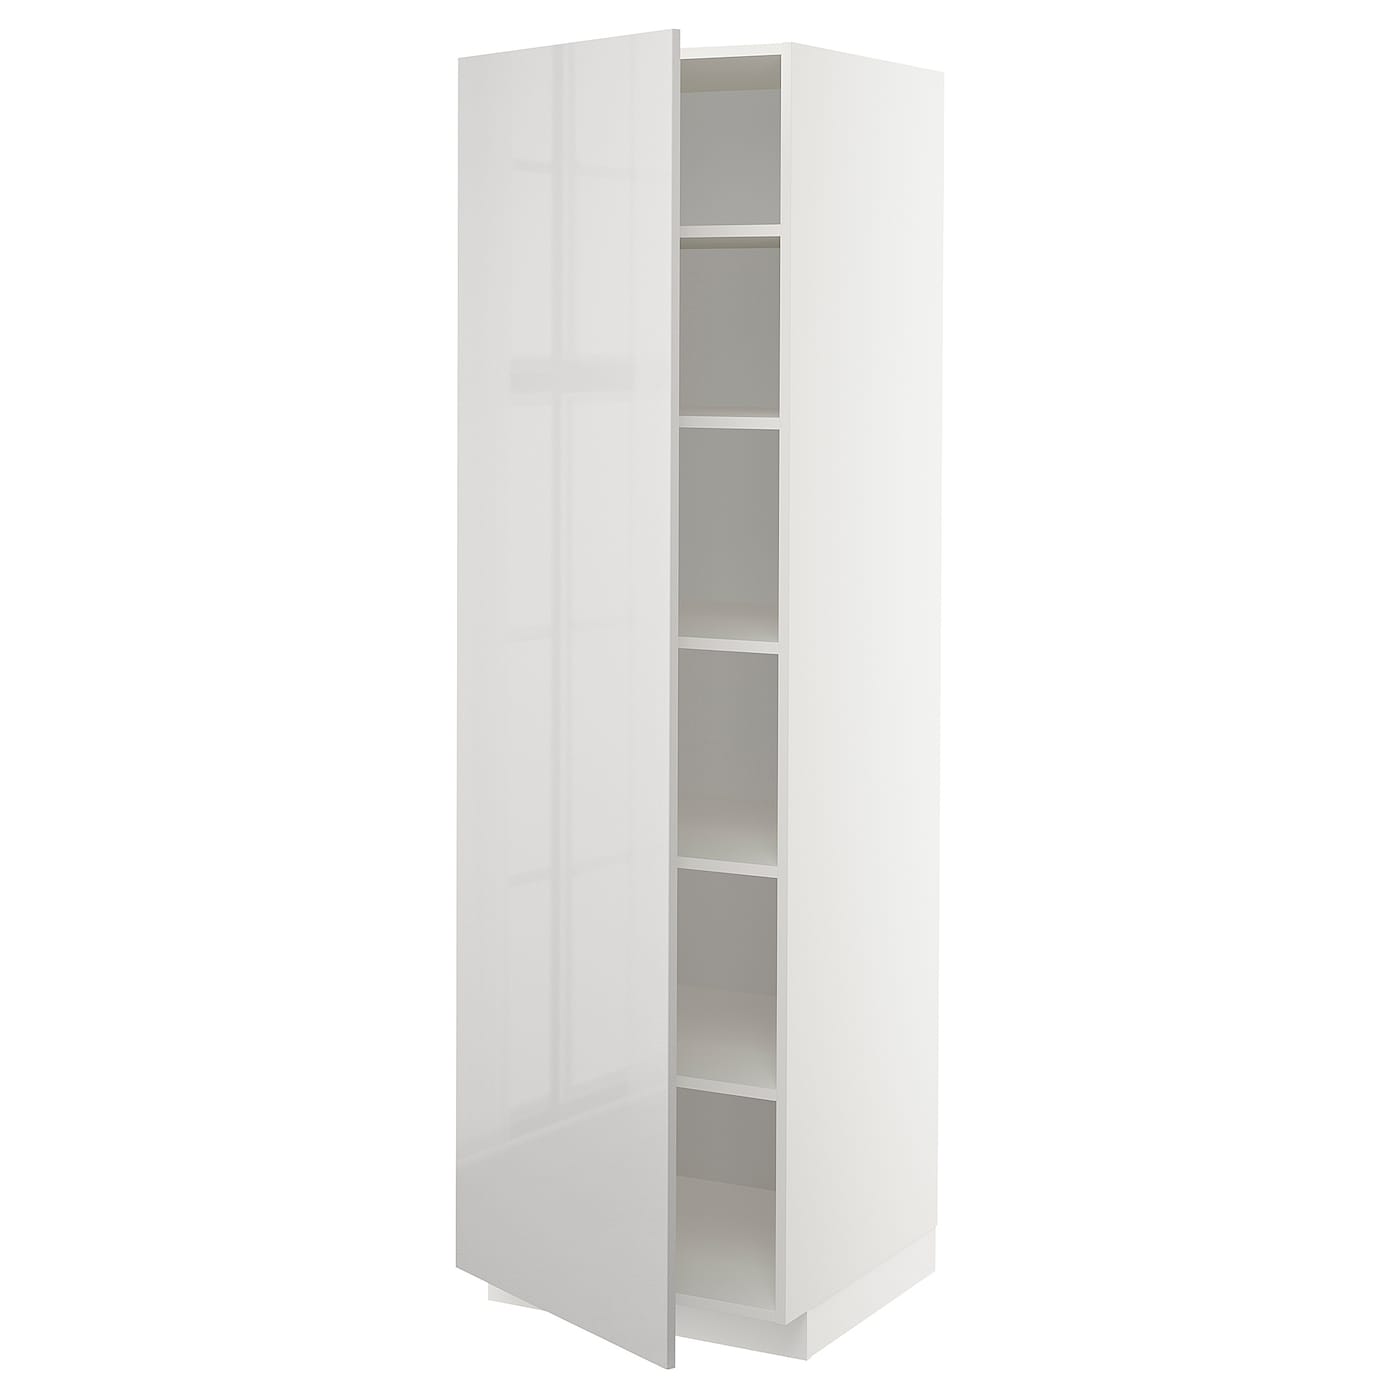 Высокий кухонный шкаф с полками - IKEA METOD/МЕТОД ИКЕА, 200х60х60 см, белый/светло-серый глянцевый